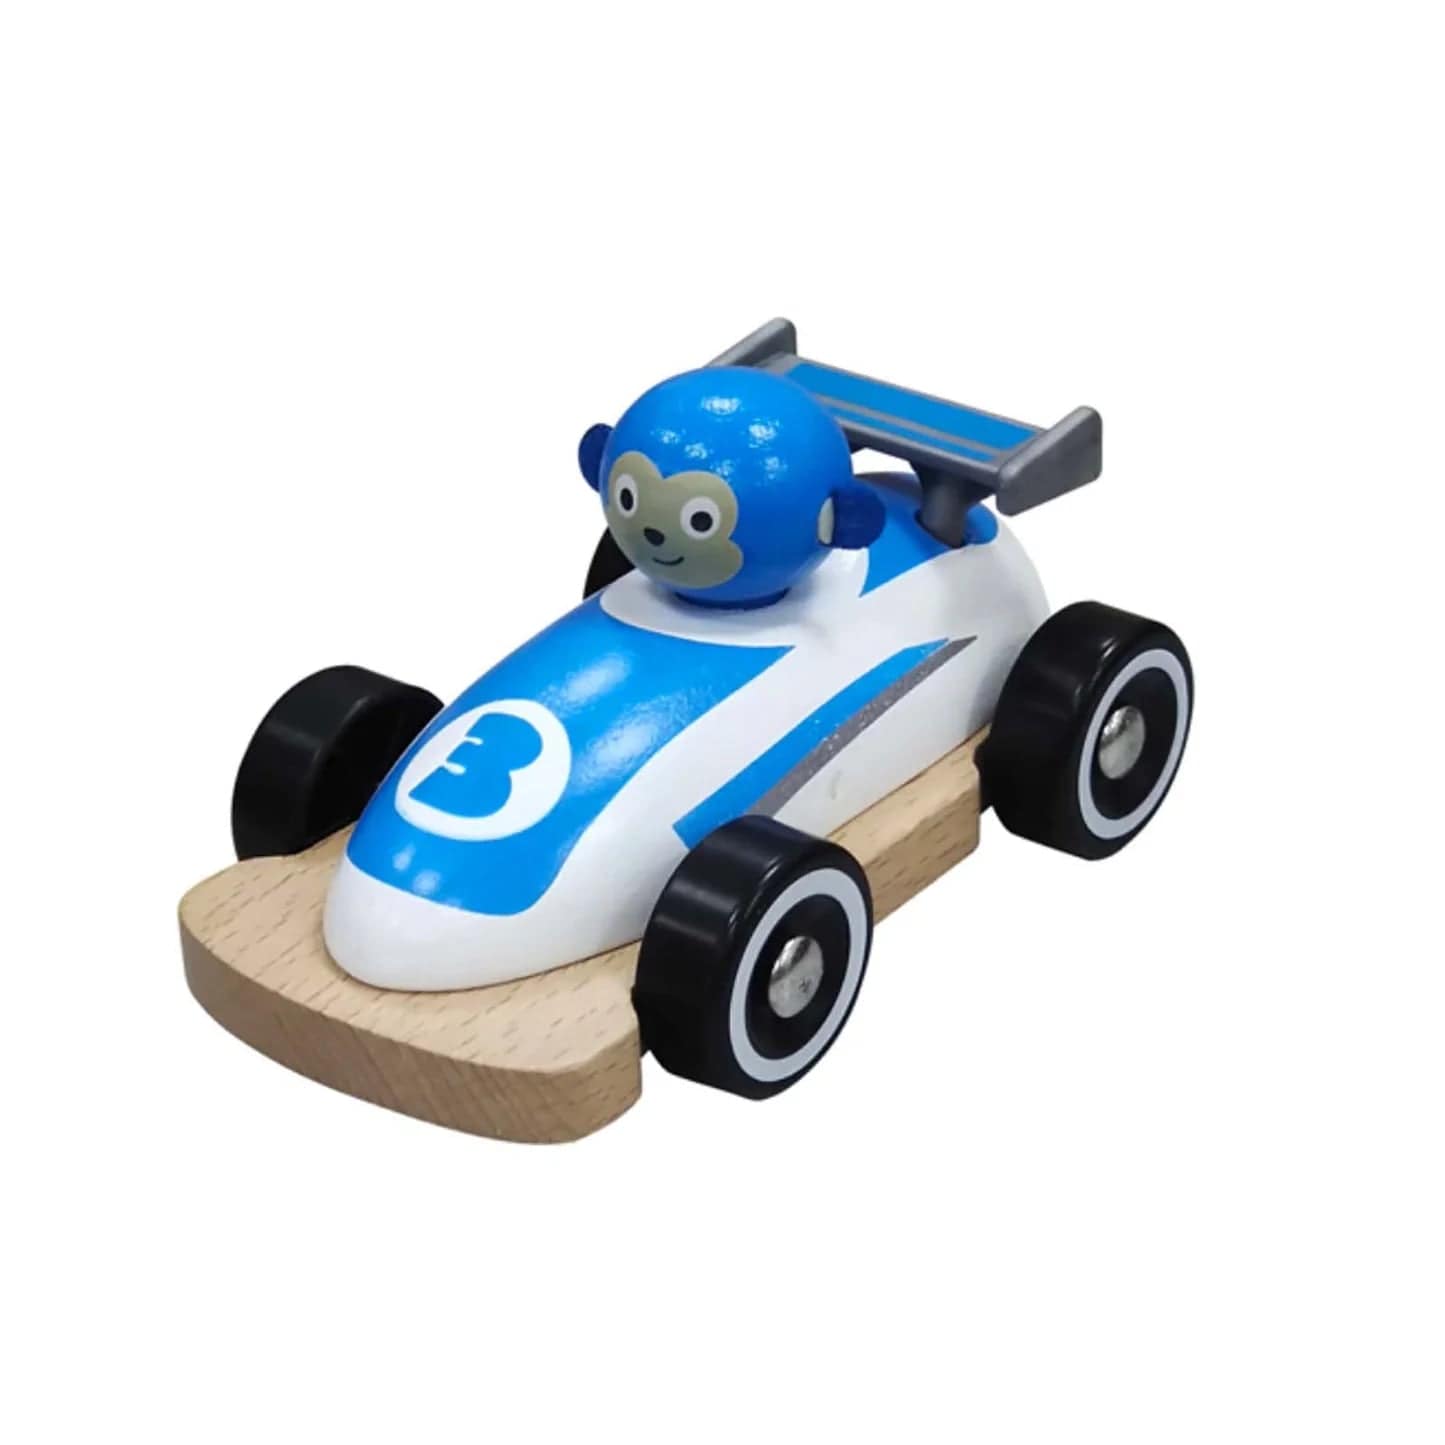 Hape Toys Wild Riders Vehicle / Racing Car - Blue